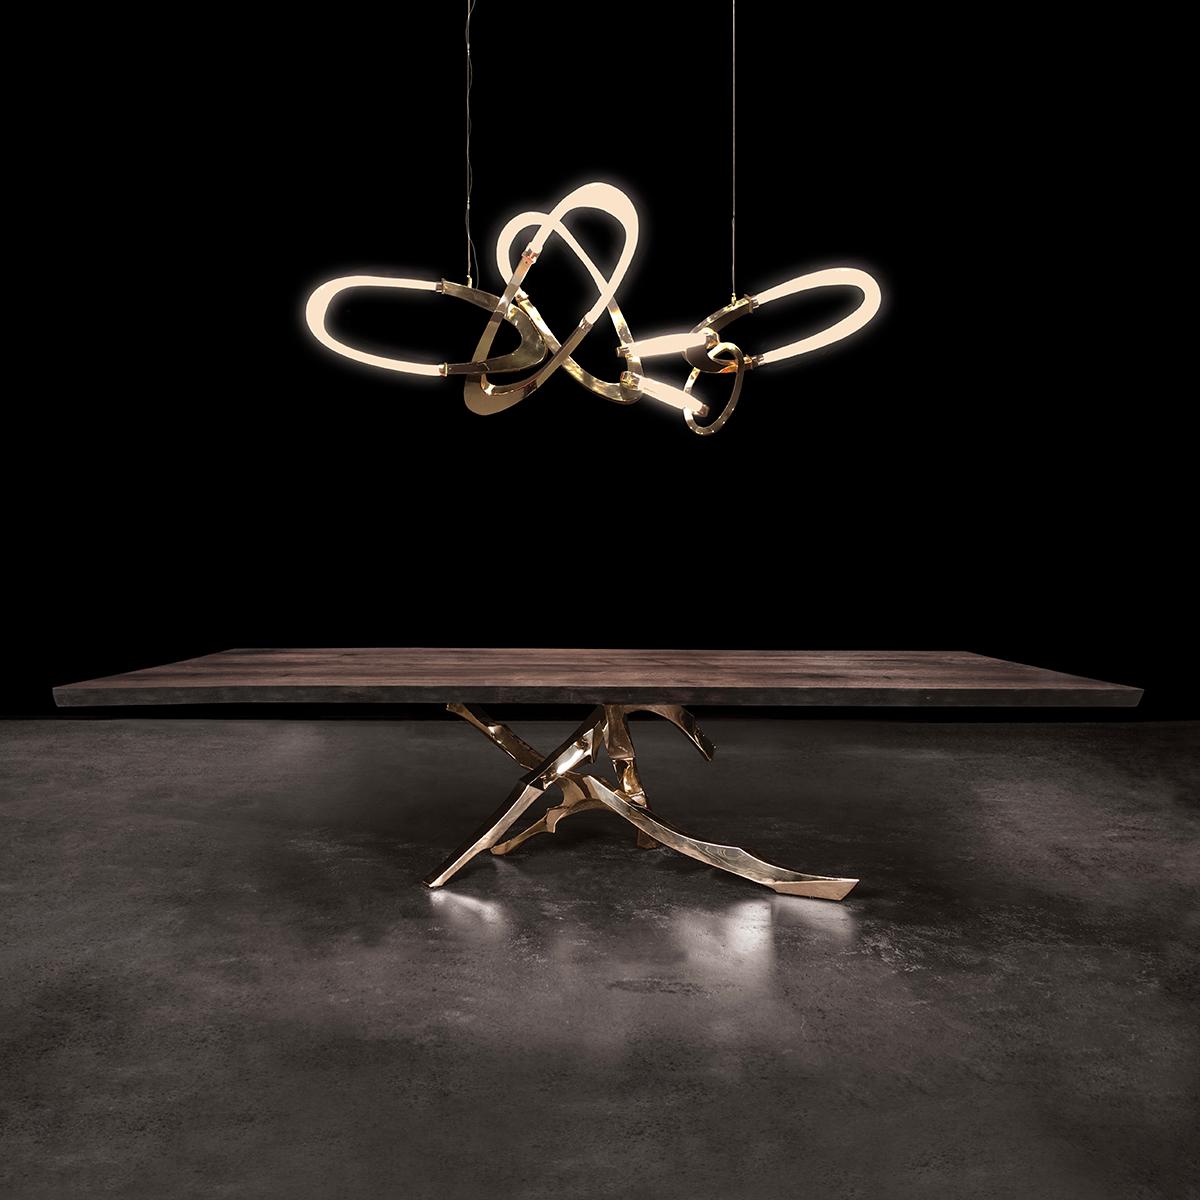 European Bouchon Chandelier: Interlocked Circular Sculptural Elements of Bronze and Glass For Sale